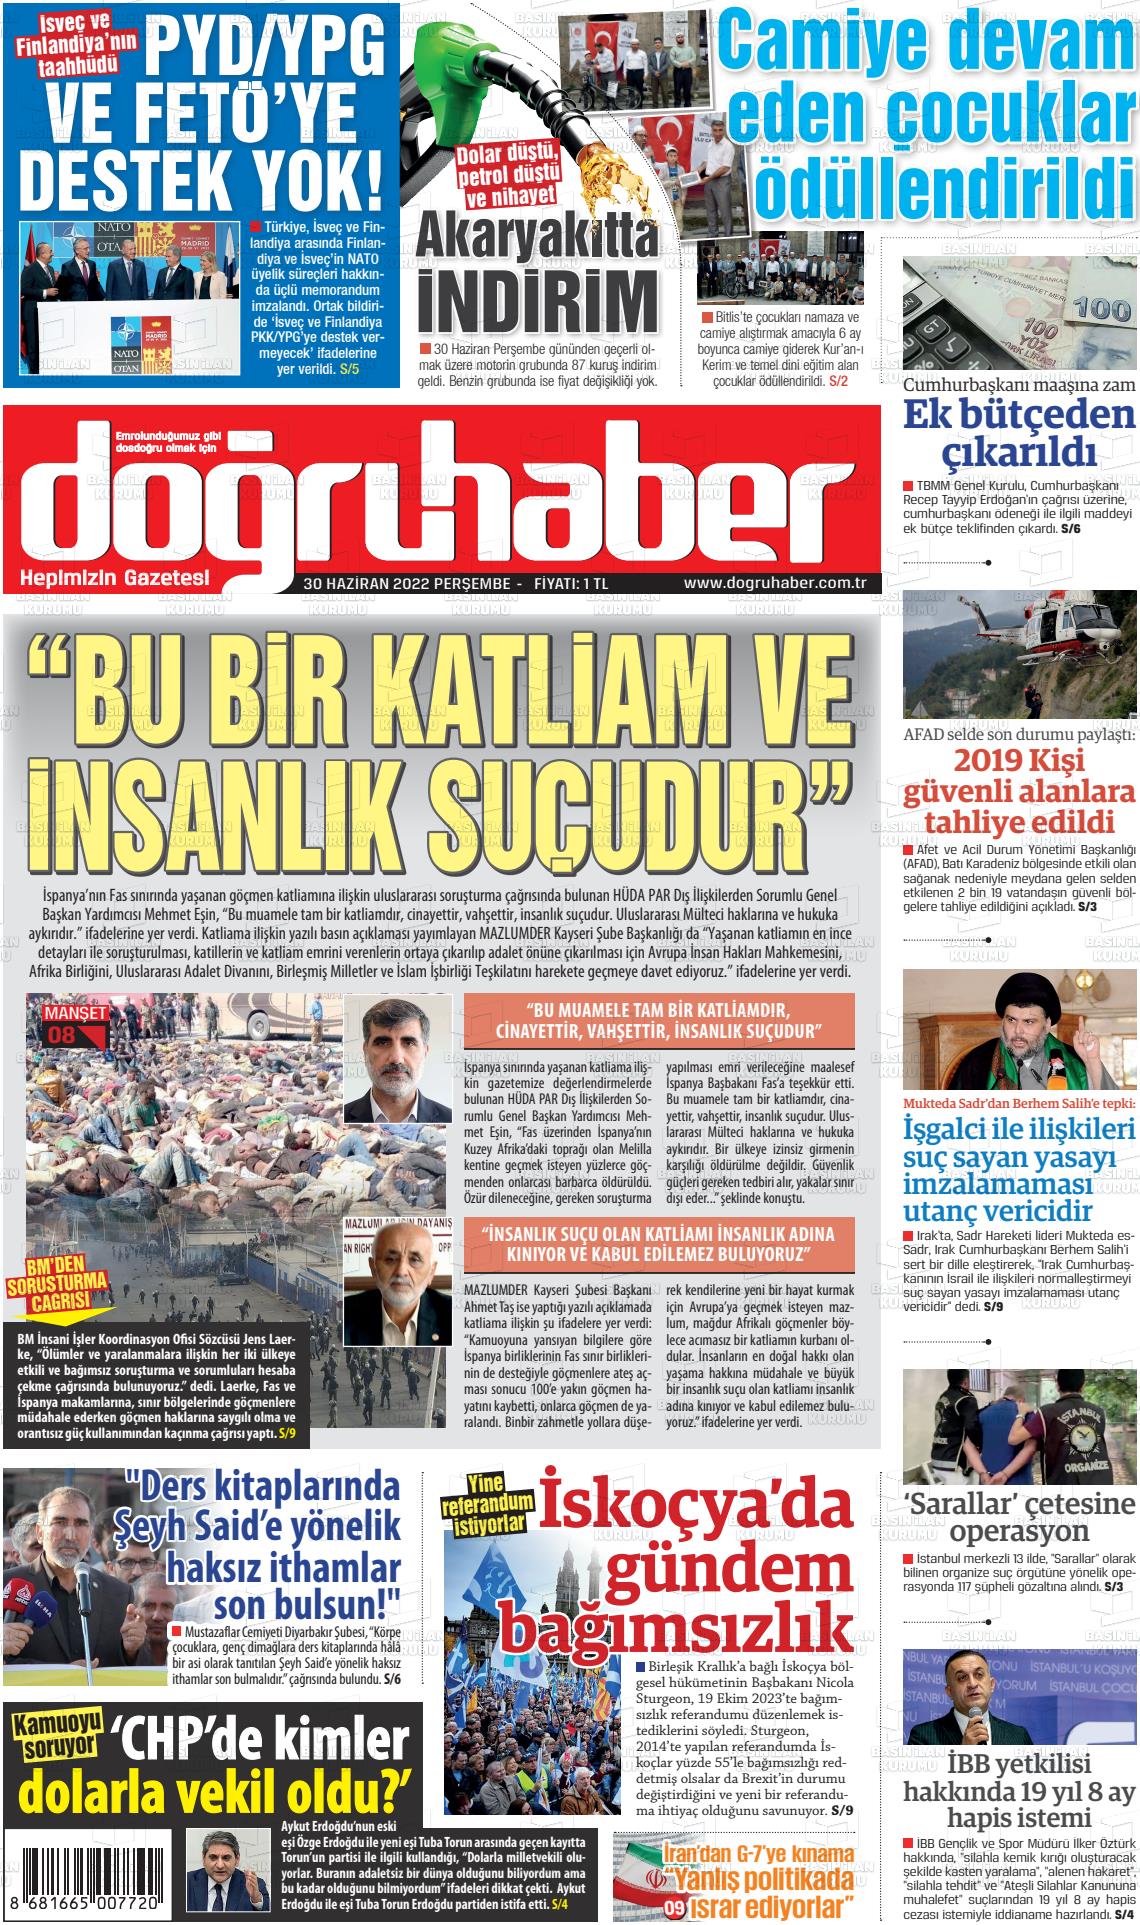 02 Temmuz 2022 Doğru Haber Gazete Manşeti